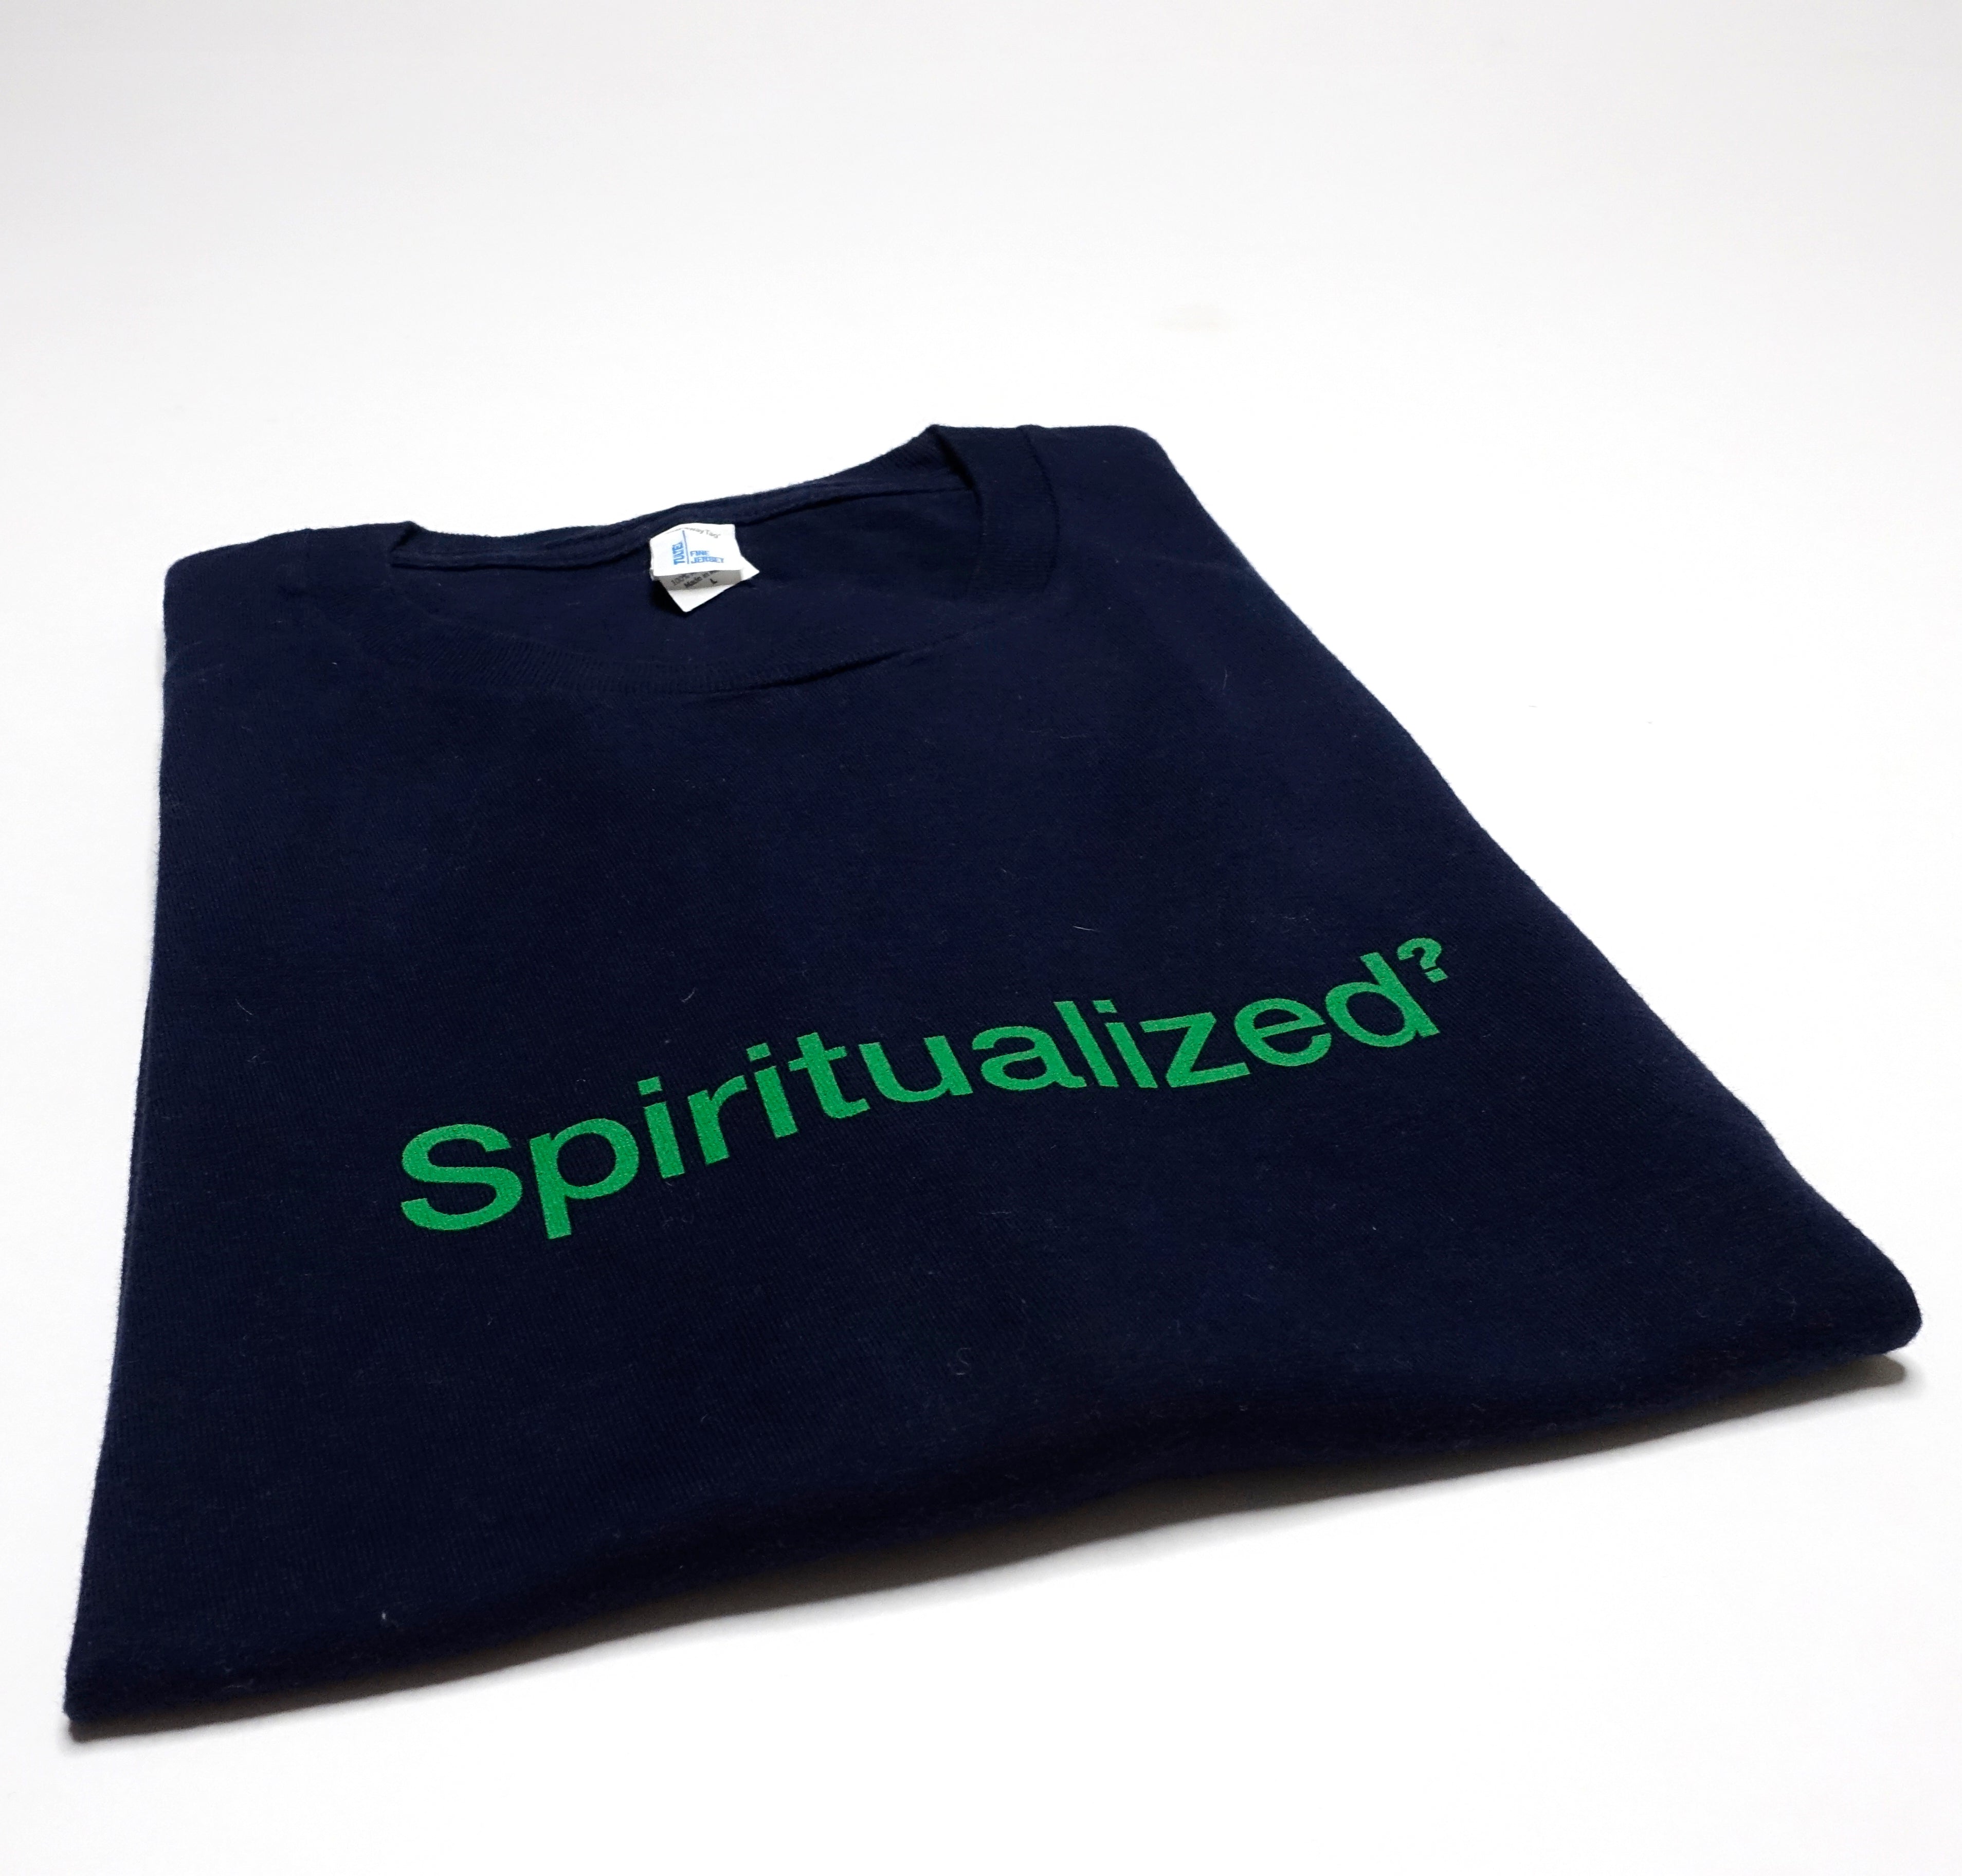 Spiritualized® - Spiritualized? Tour Shirt Size Large